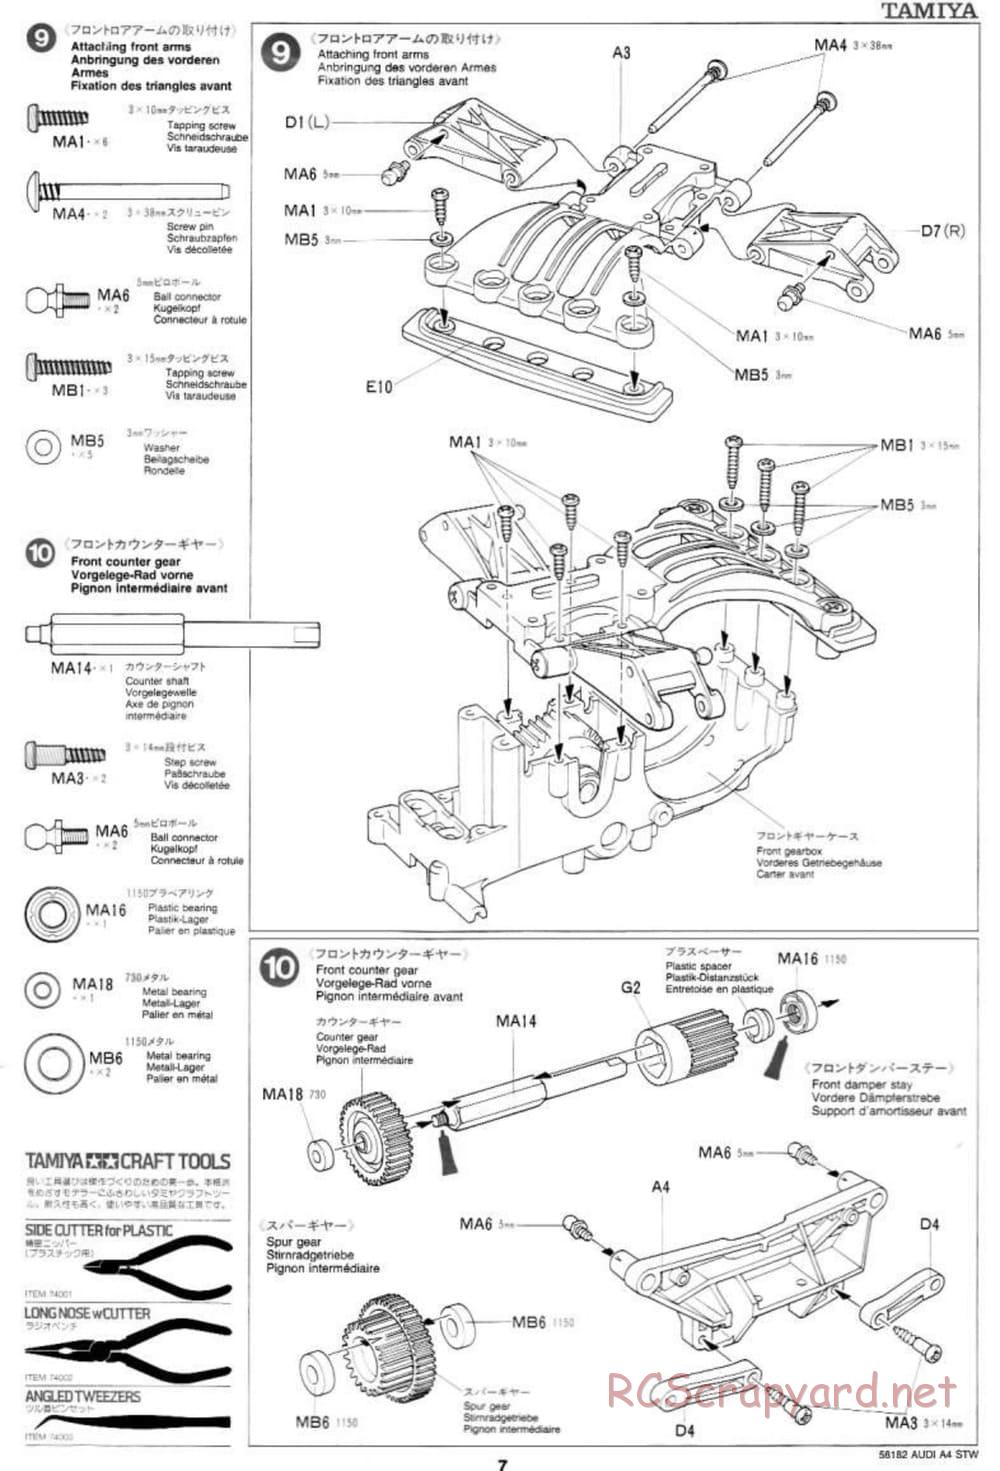 Tamiya - Audi A4 STW - TA-03F Chassis - Manual - Page 7